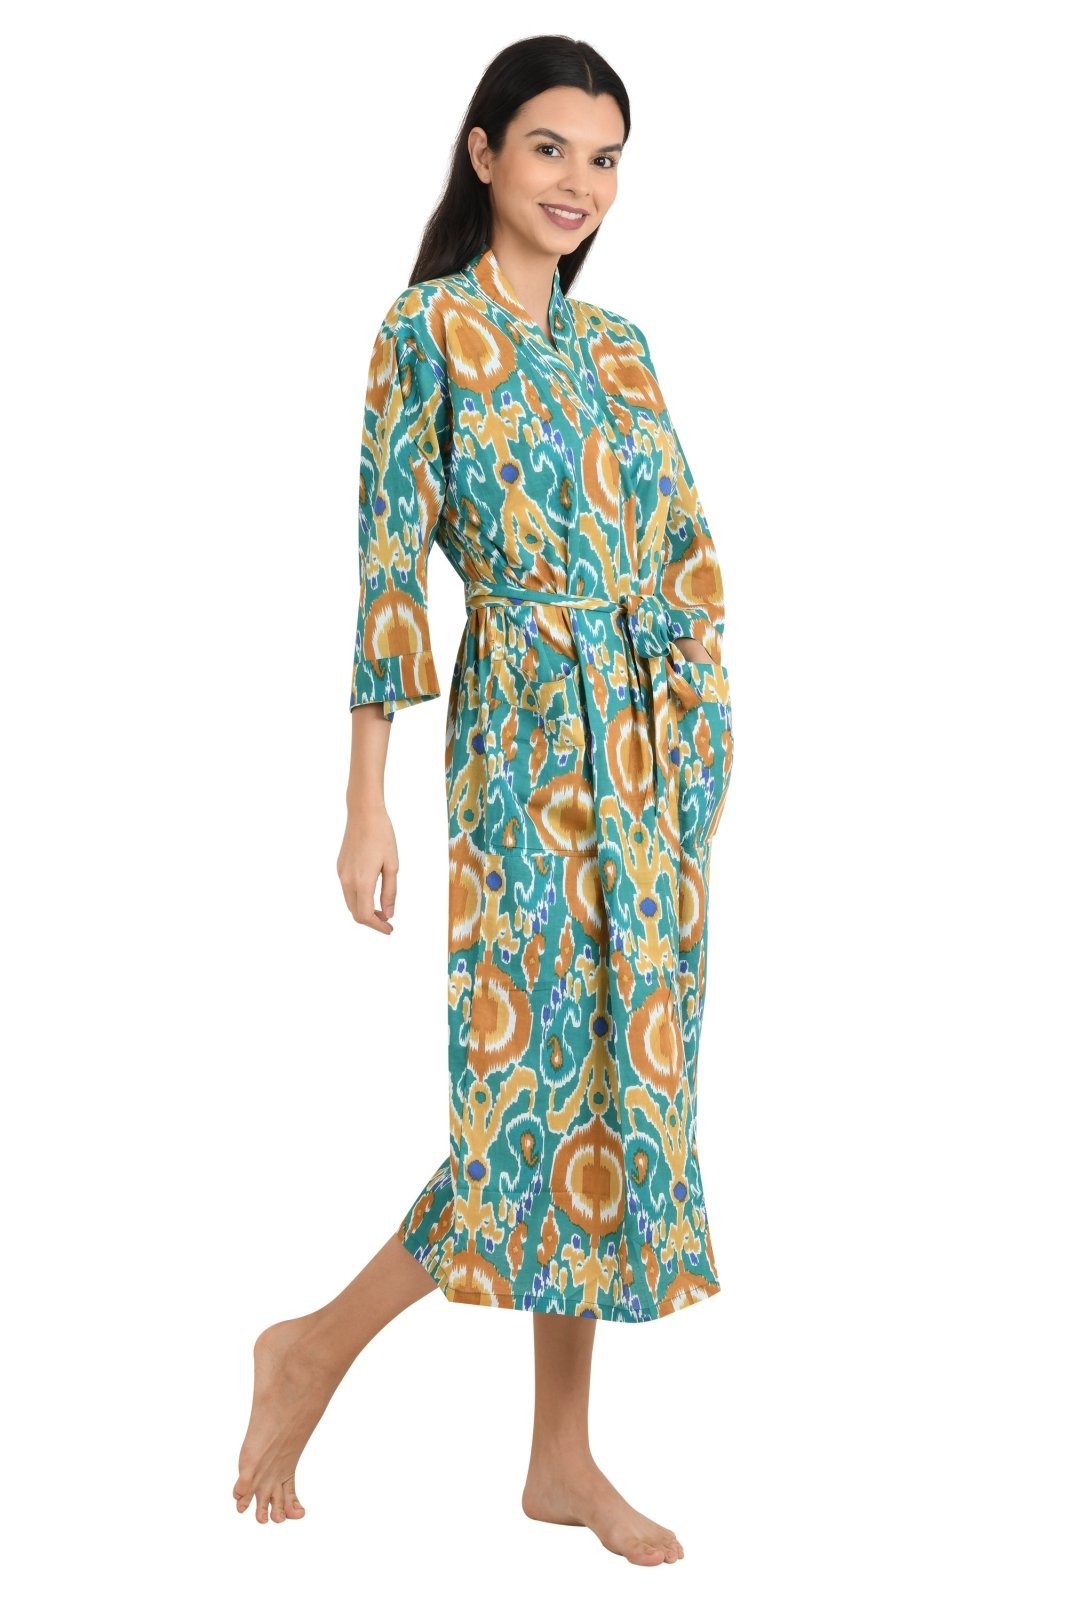 Boho Cotton Kimono House Robe Indian Handprinted Ikat Print Pattern | Lightweight Summer Luxury Beach Holidays Yacht Cover Up Stunning Dress - The Eastern Loom